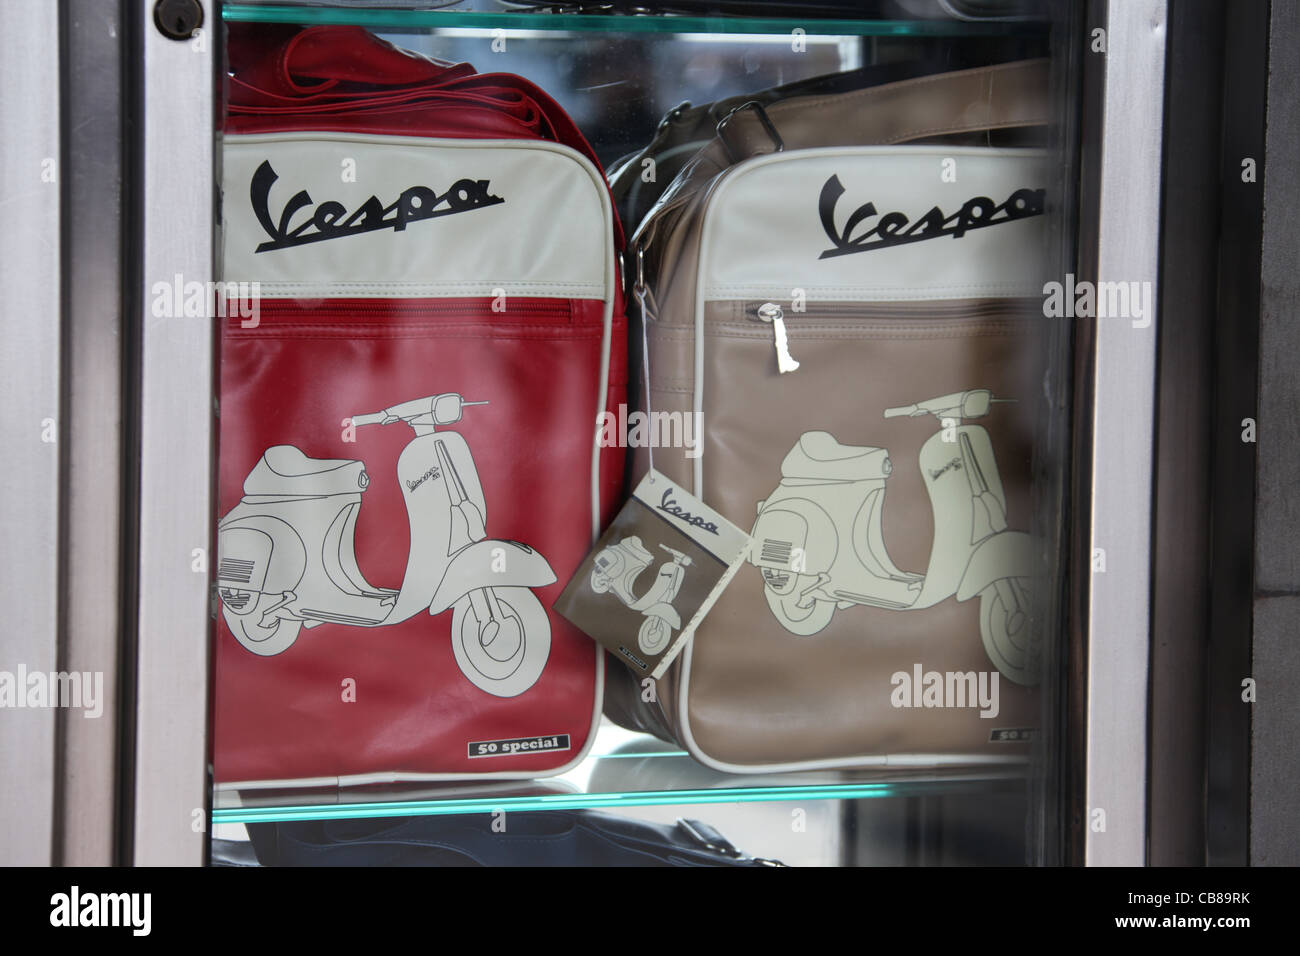 Vespa Bags for sale in Rome Stock Photo - Alamy